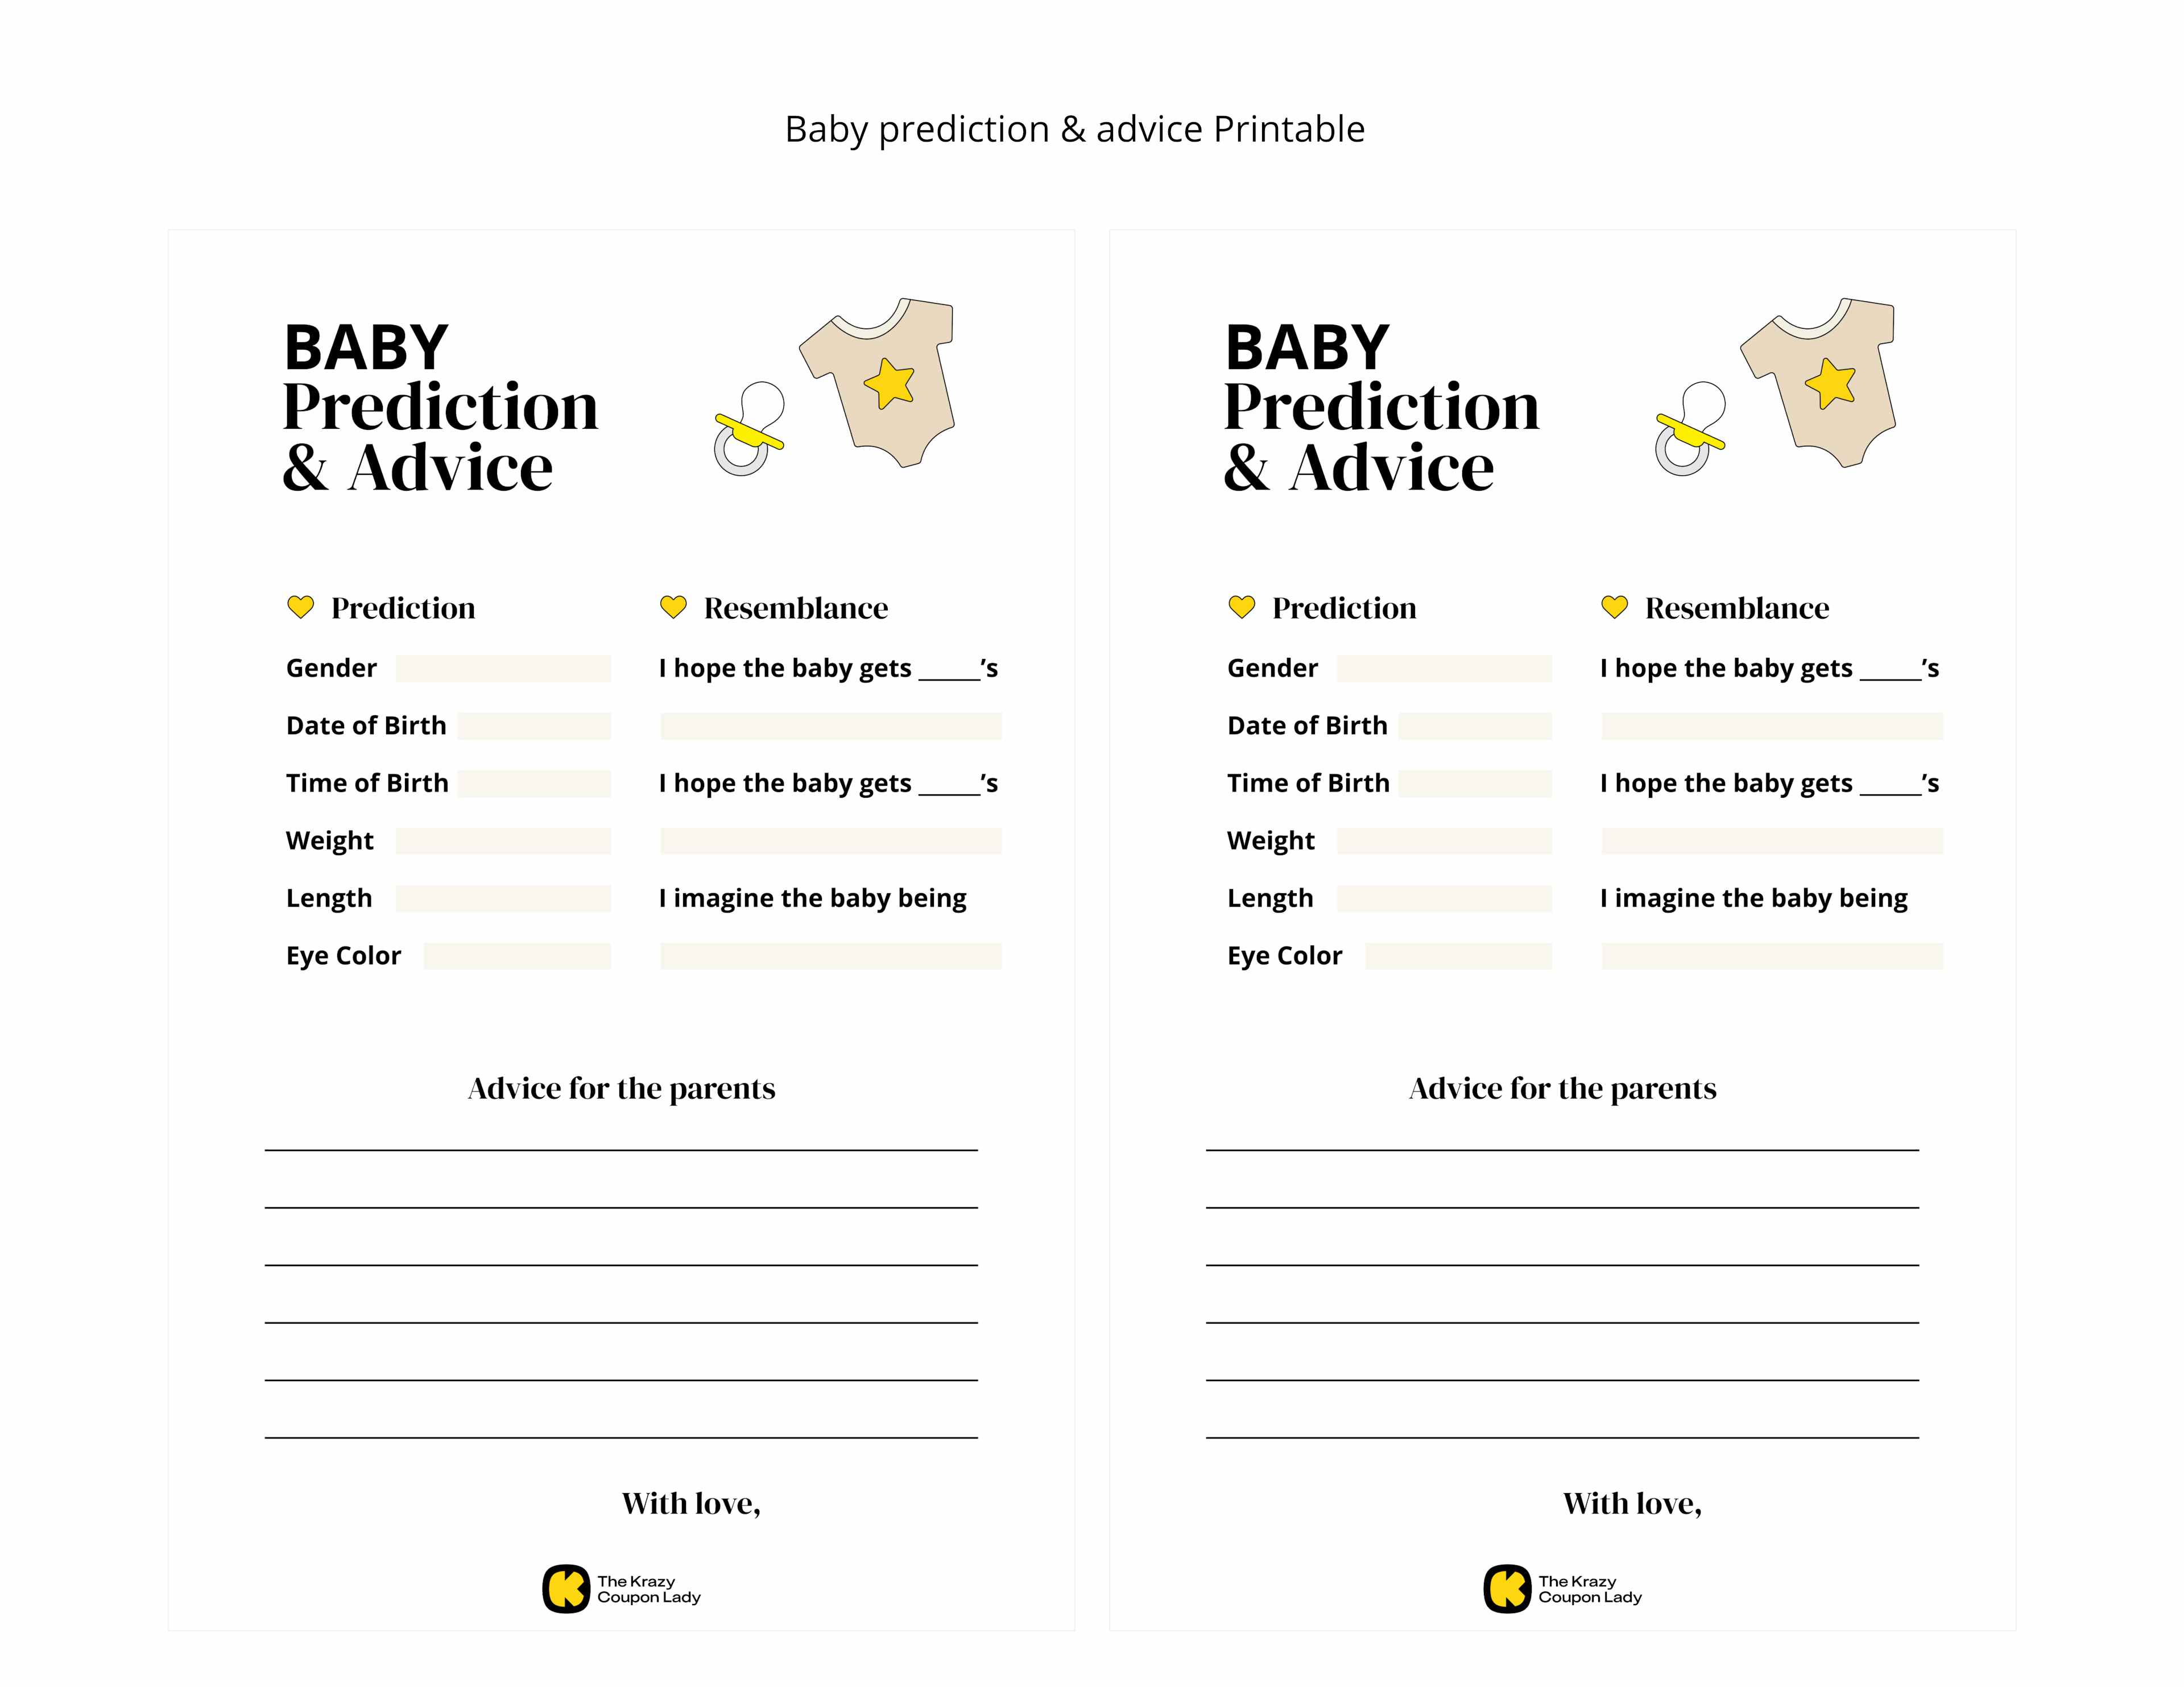 Baby prediction & advice printable